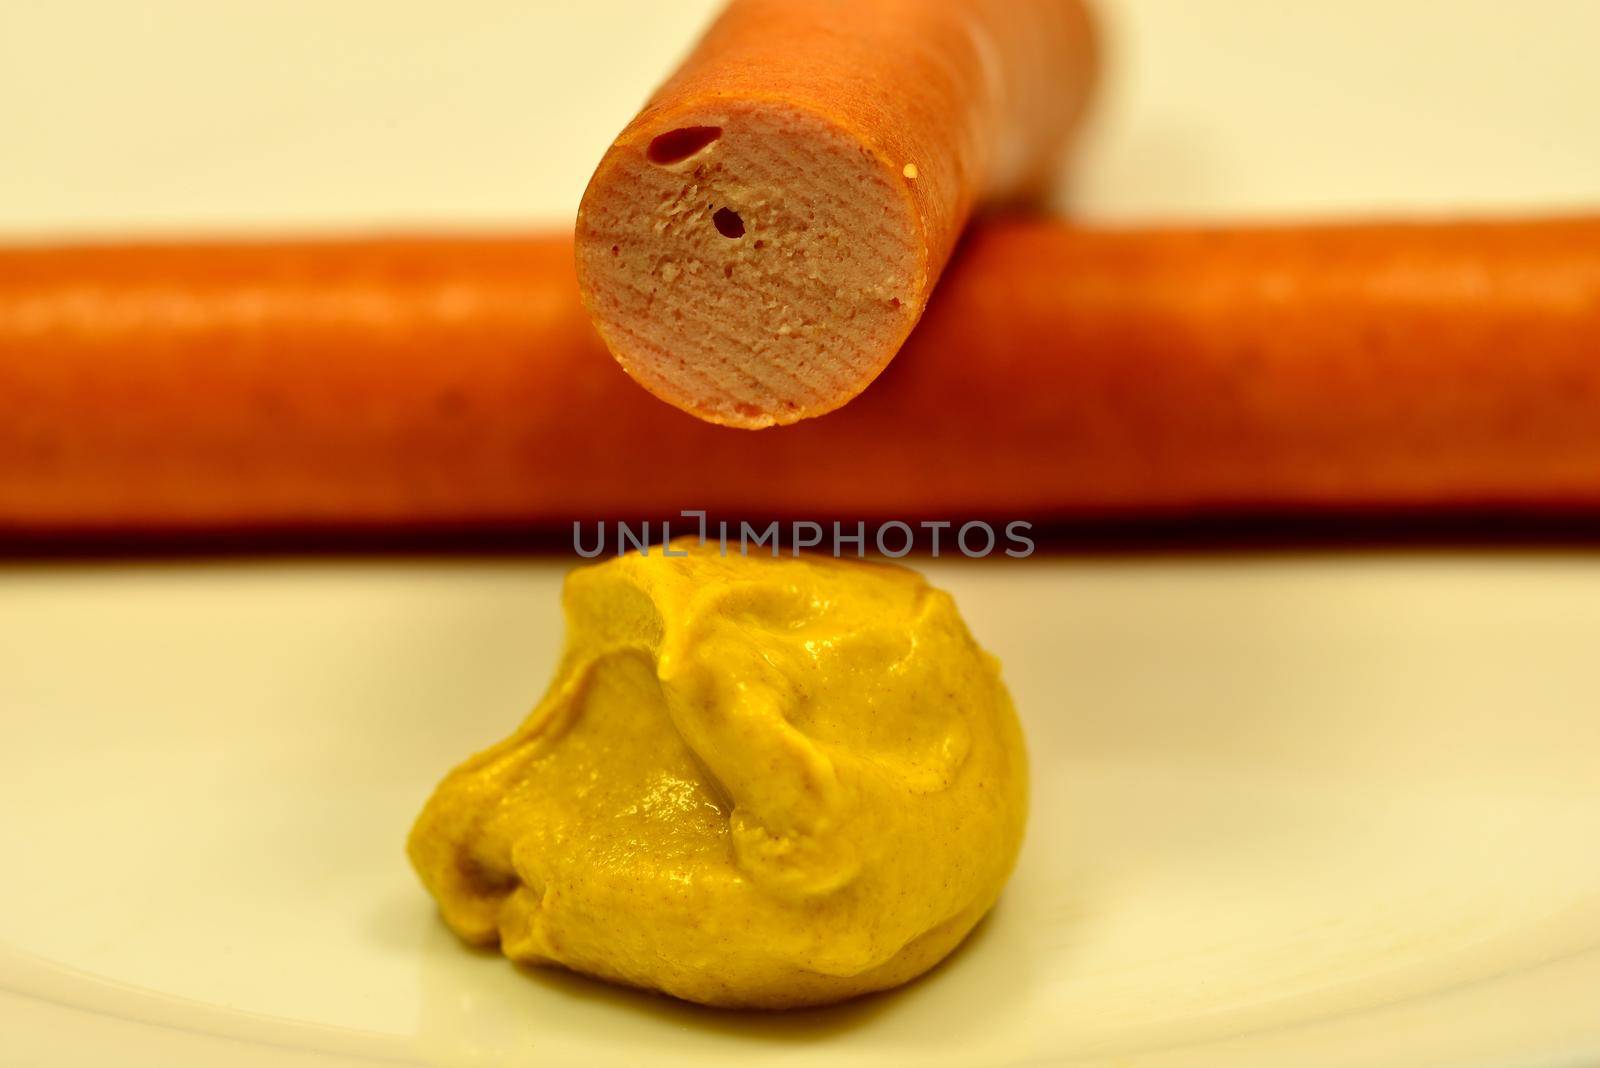 Wiener sausage with mustard in a closeup by Jochen